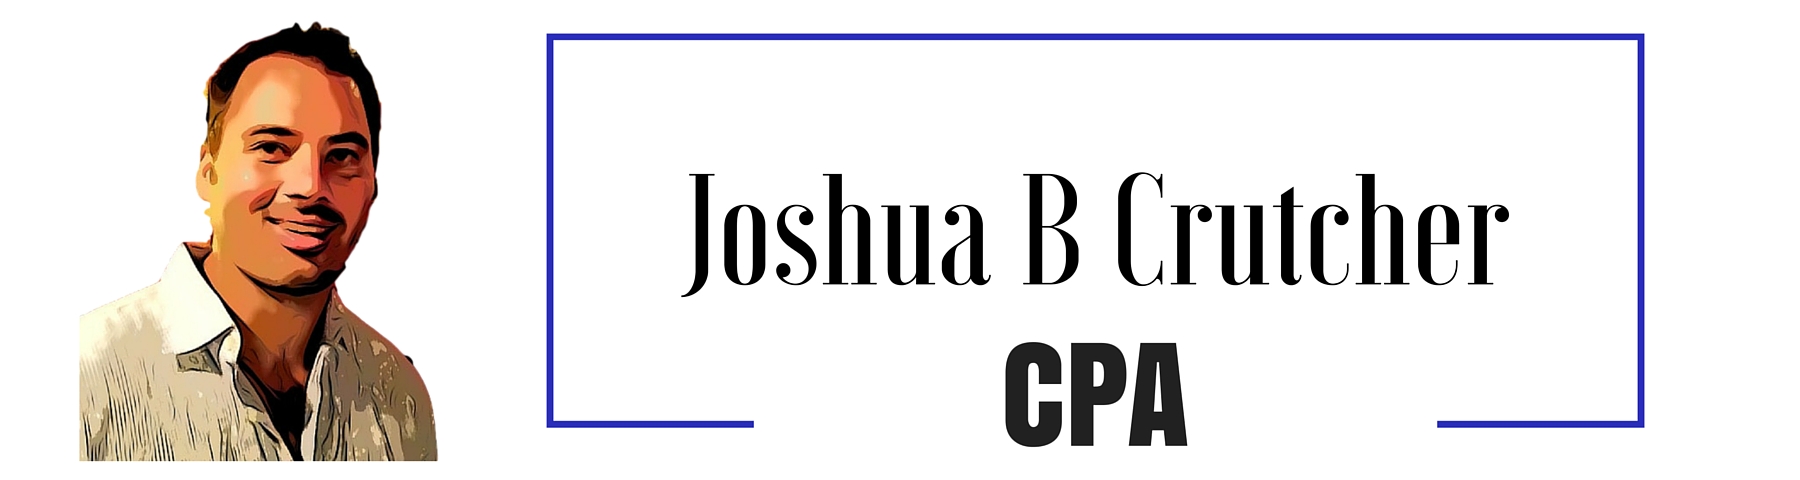 Joshua B Crutcher